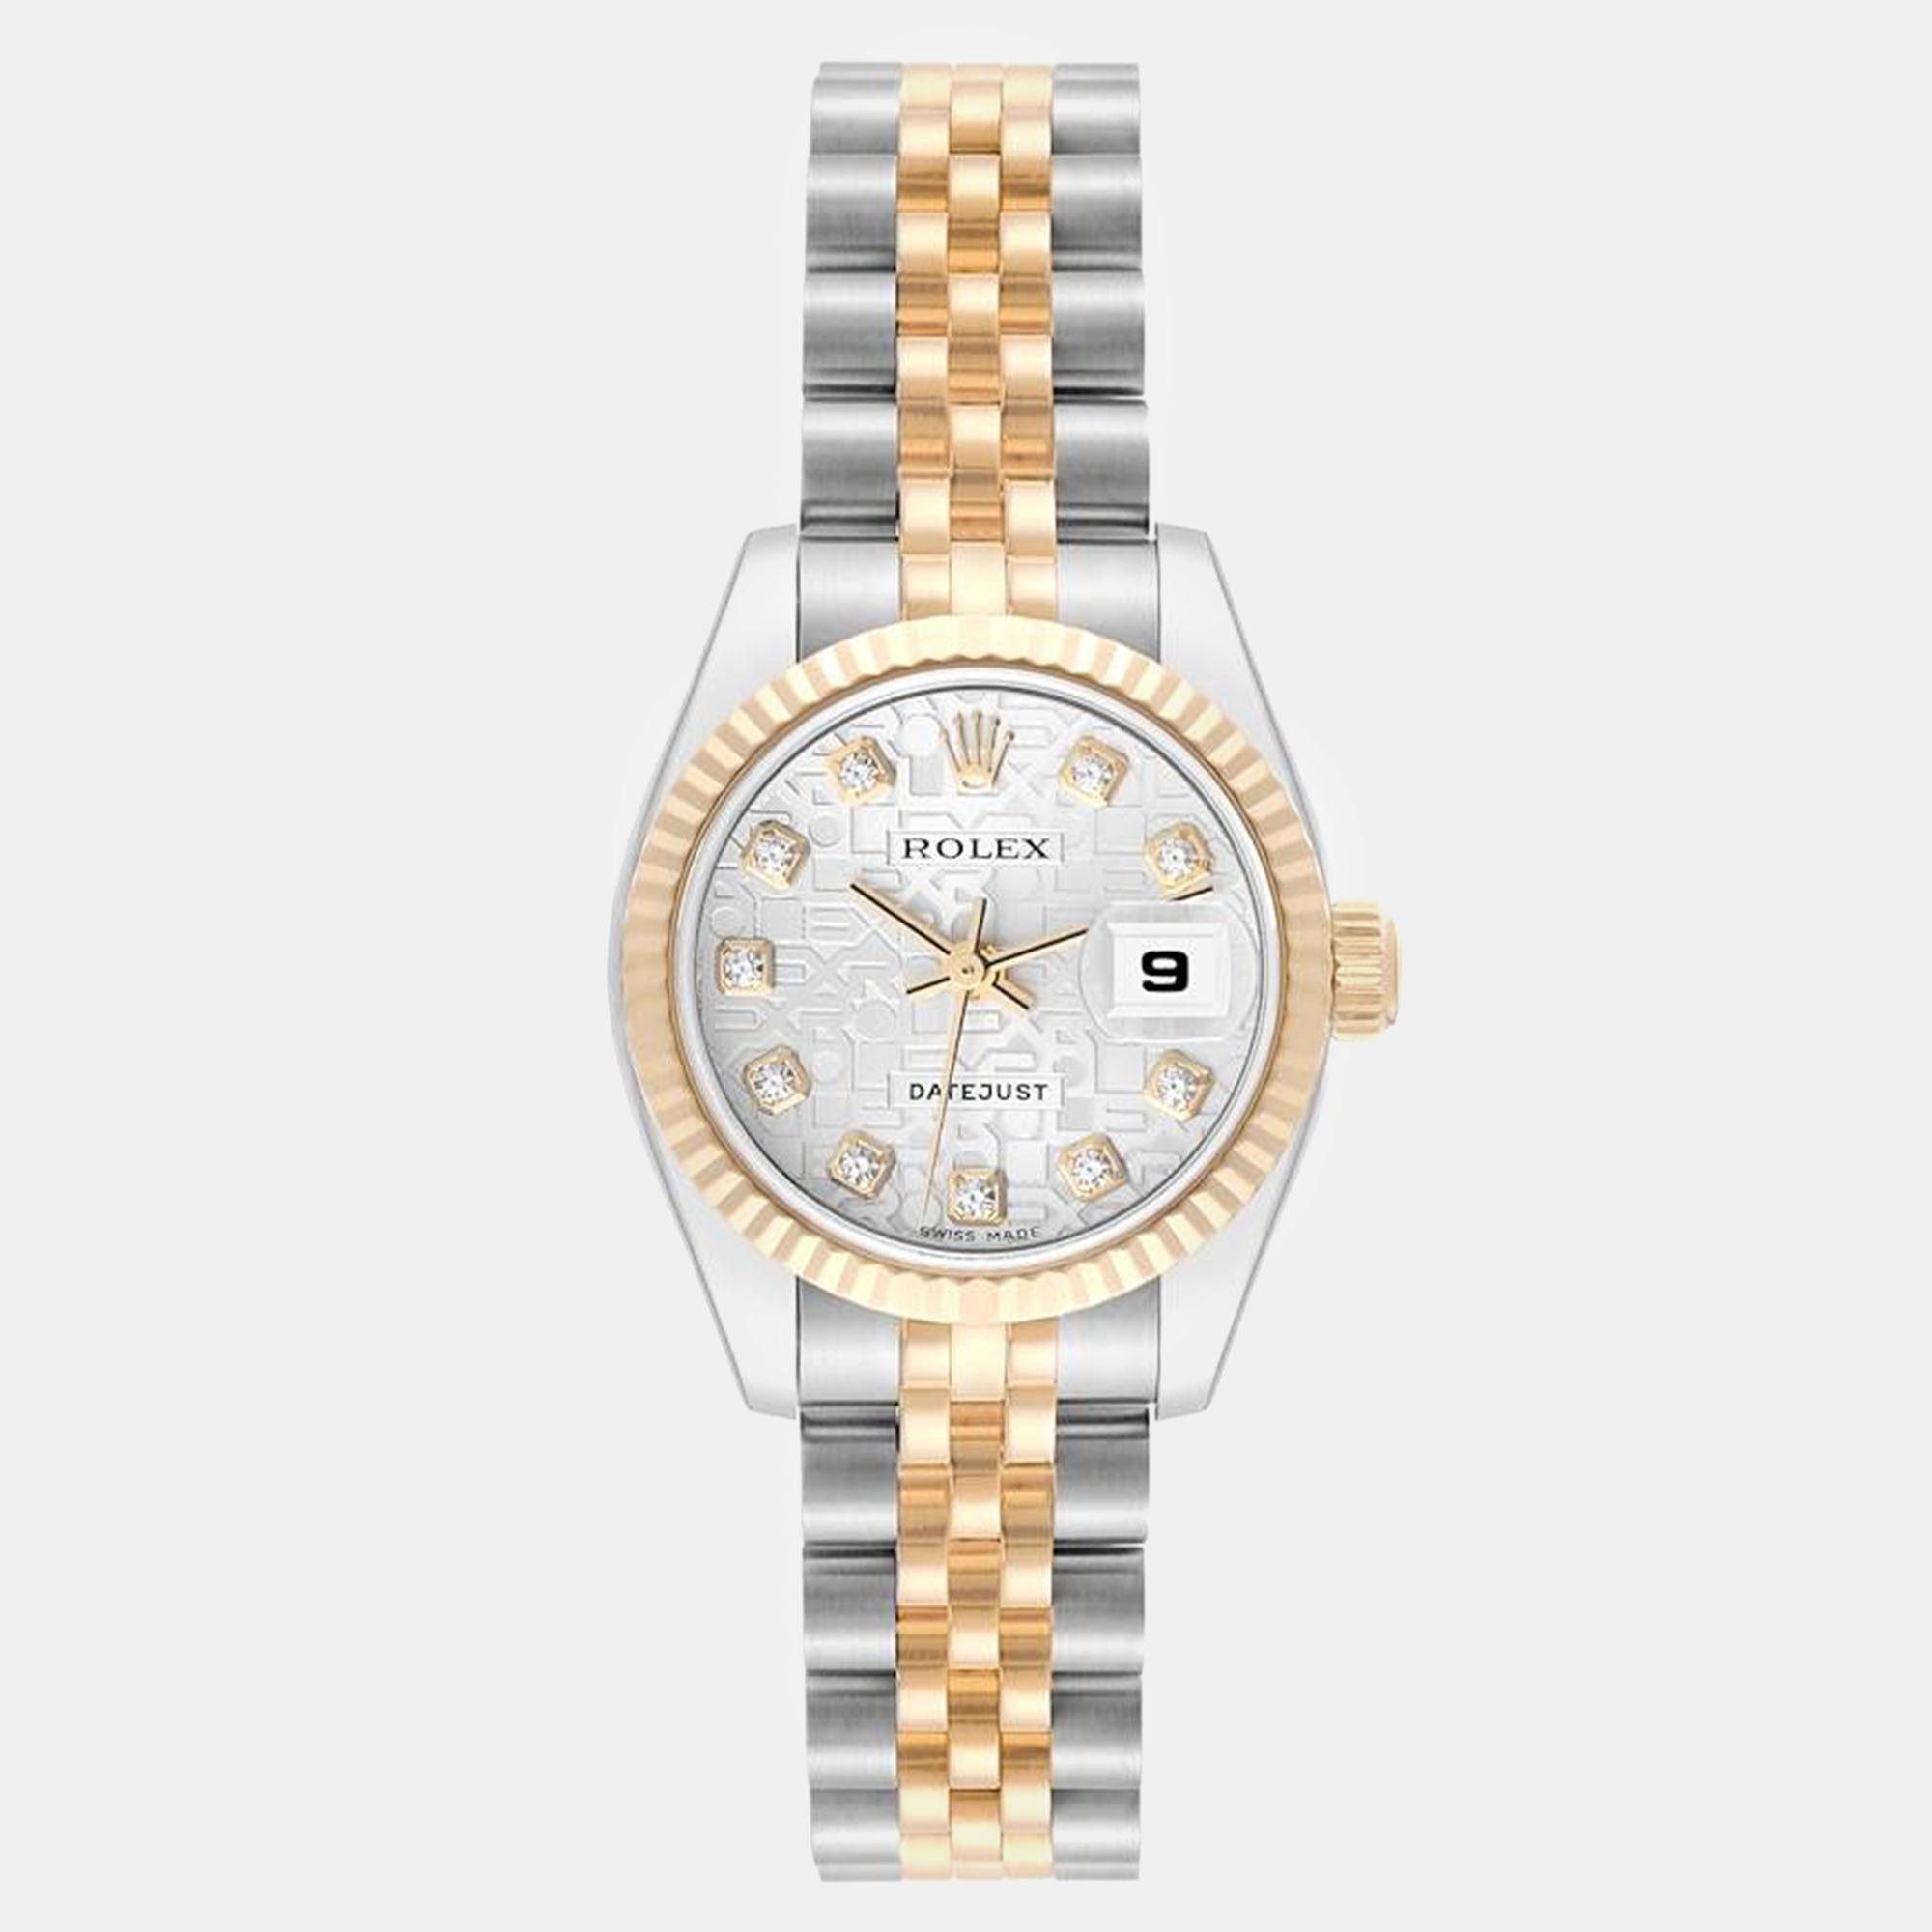 Rolex datejust steel yellow gold anniversary diamond dial ladies watch 179173 26 mm